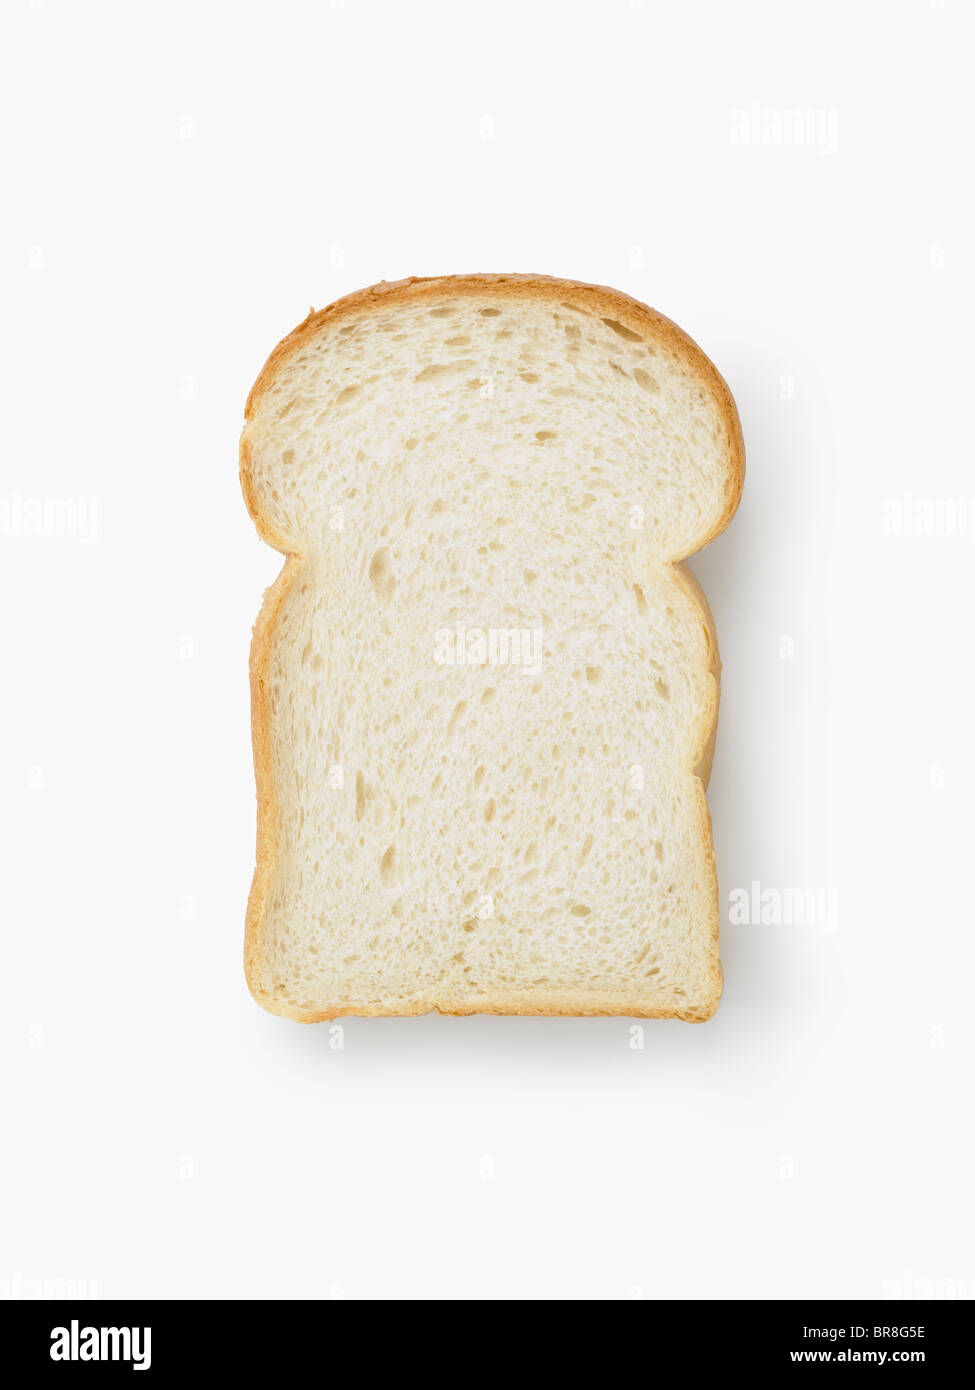 https://c8.alamy.com/comp/BR8G5E/slice-of-white-bread-BR8G5E.jpg